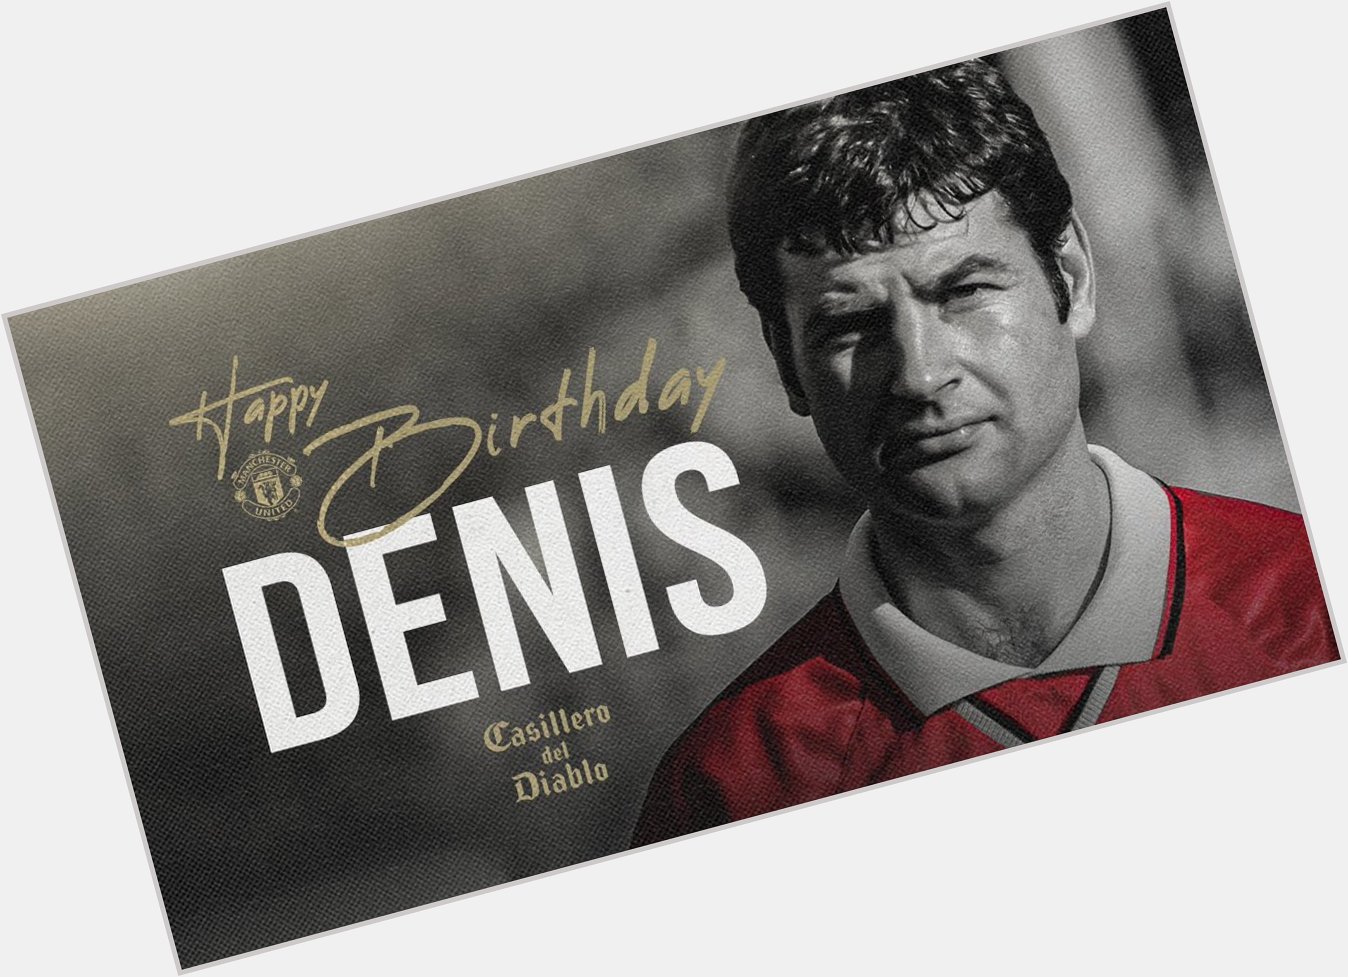 What a player... happy birthday, Denis Irwin!     